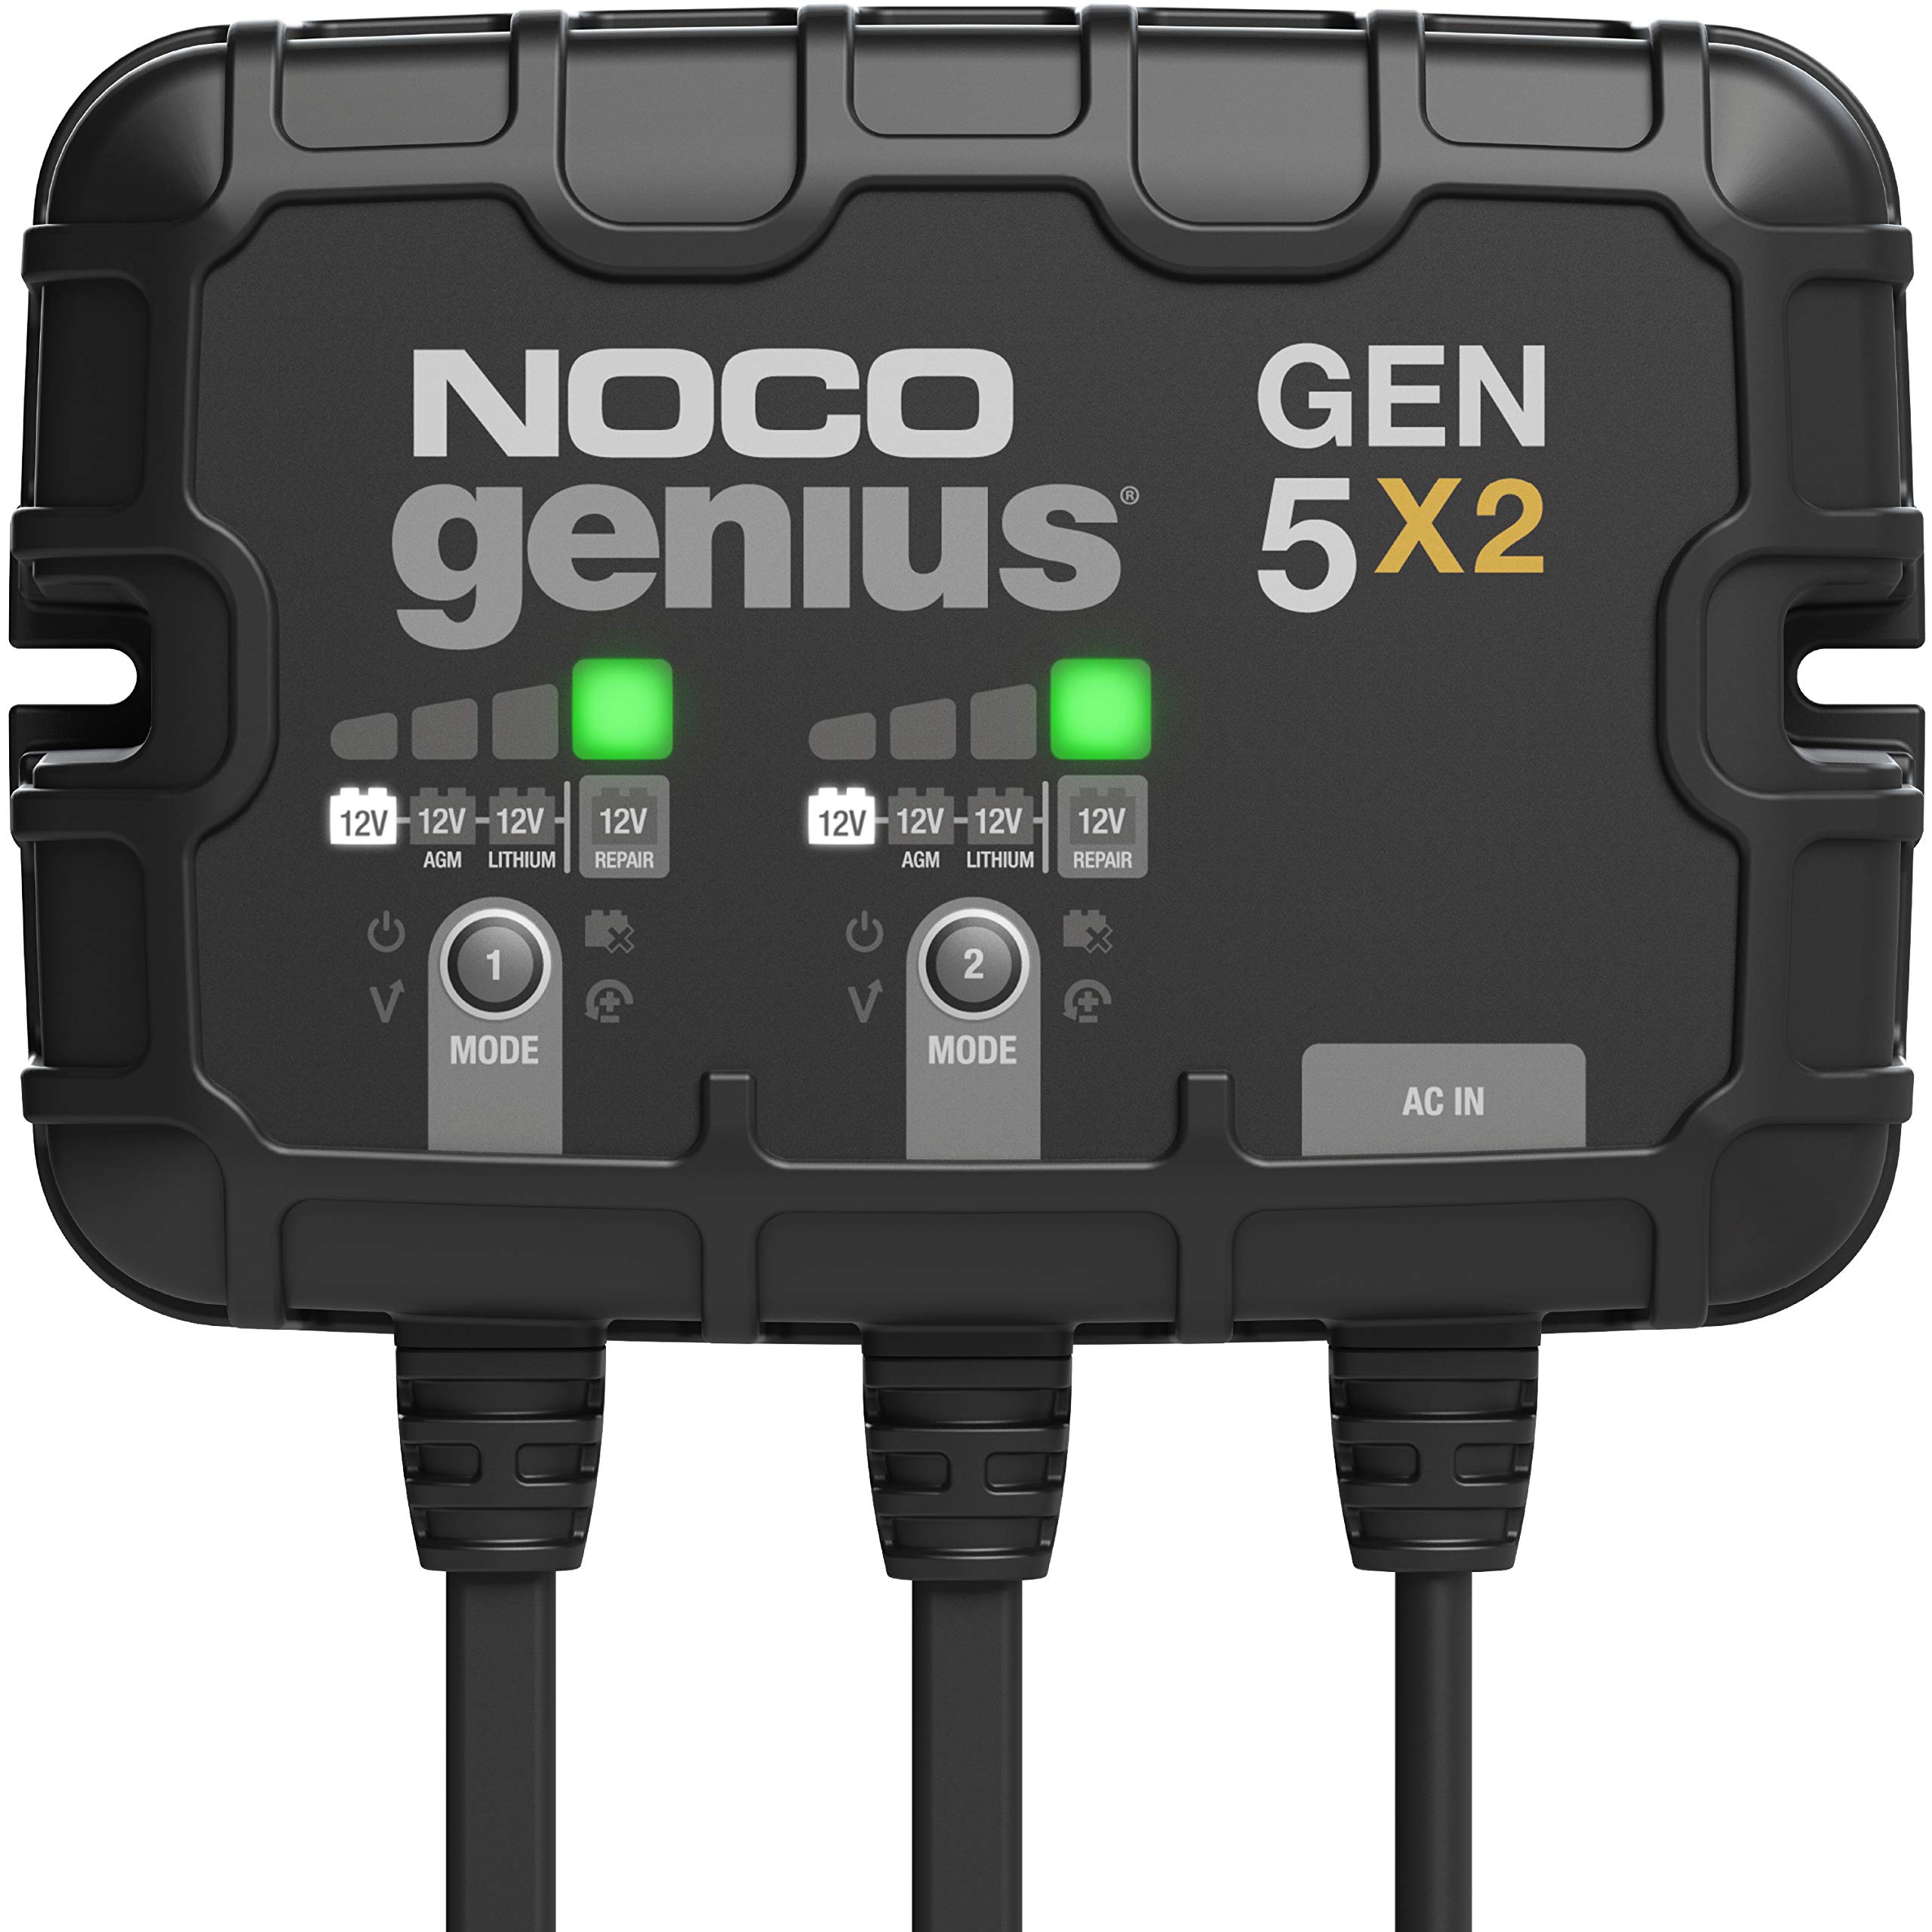  NOCO Genius GEN5X2、2バンク、10A (5A/バンク) スマートマリンバッテリー充電器、12V防水オンボードボート充電器、AGM、リチウム(LiFePO4)、およびディープ...